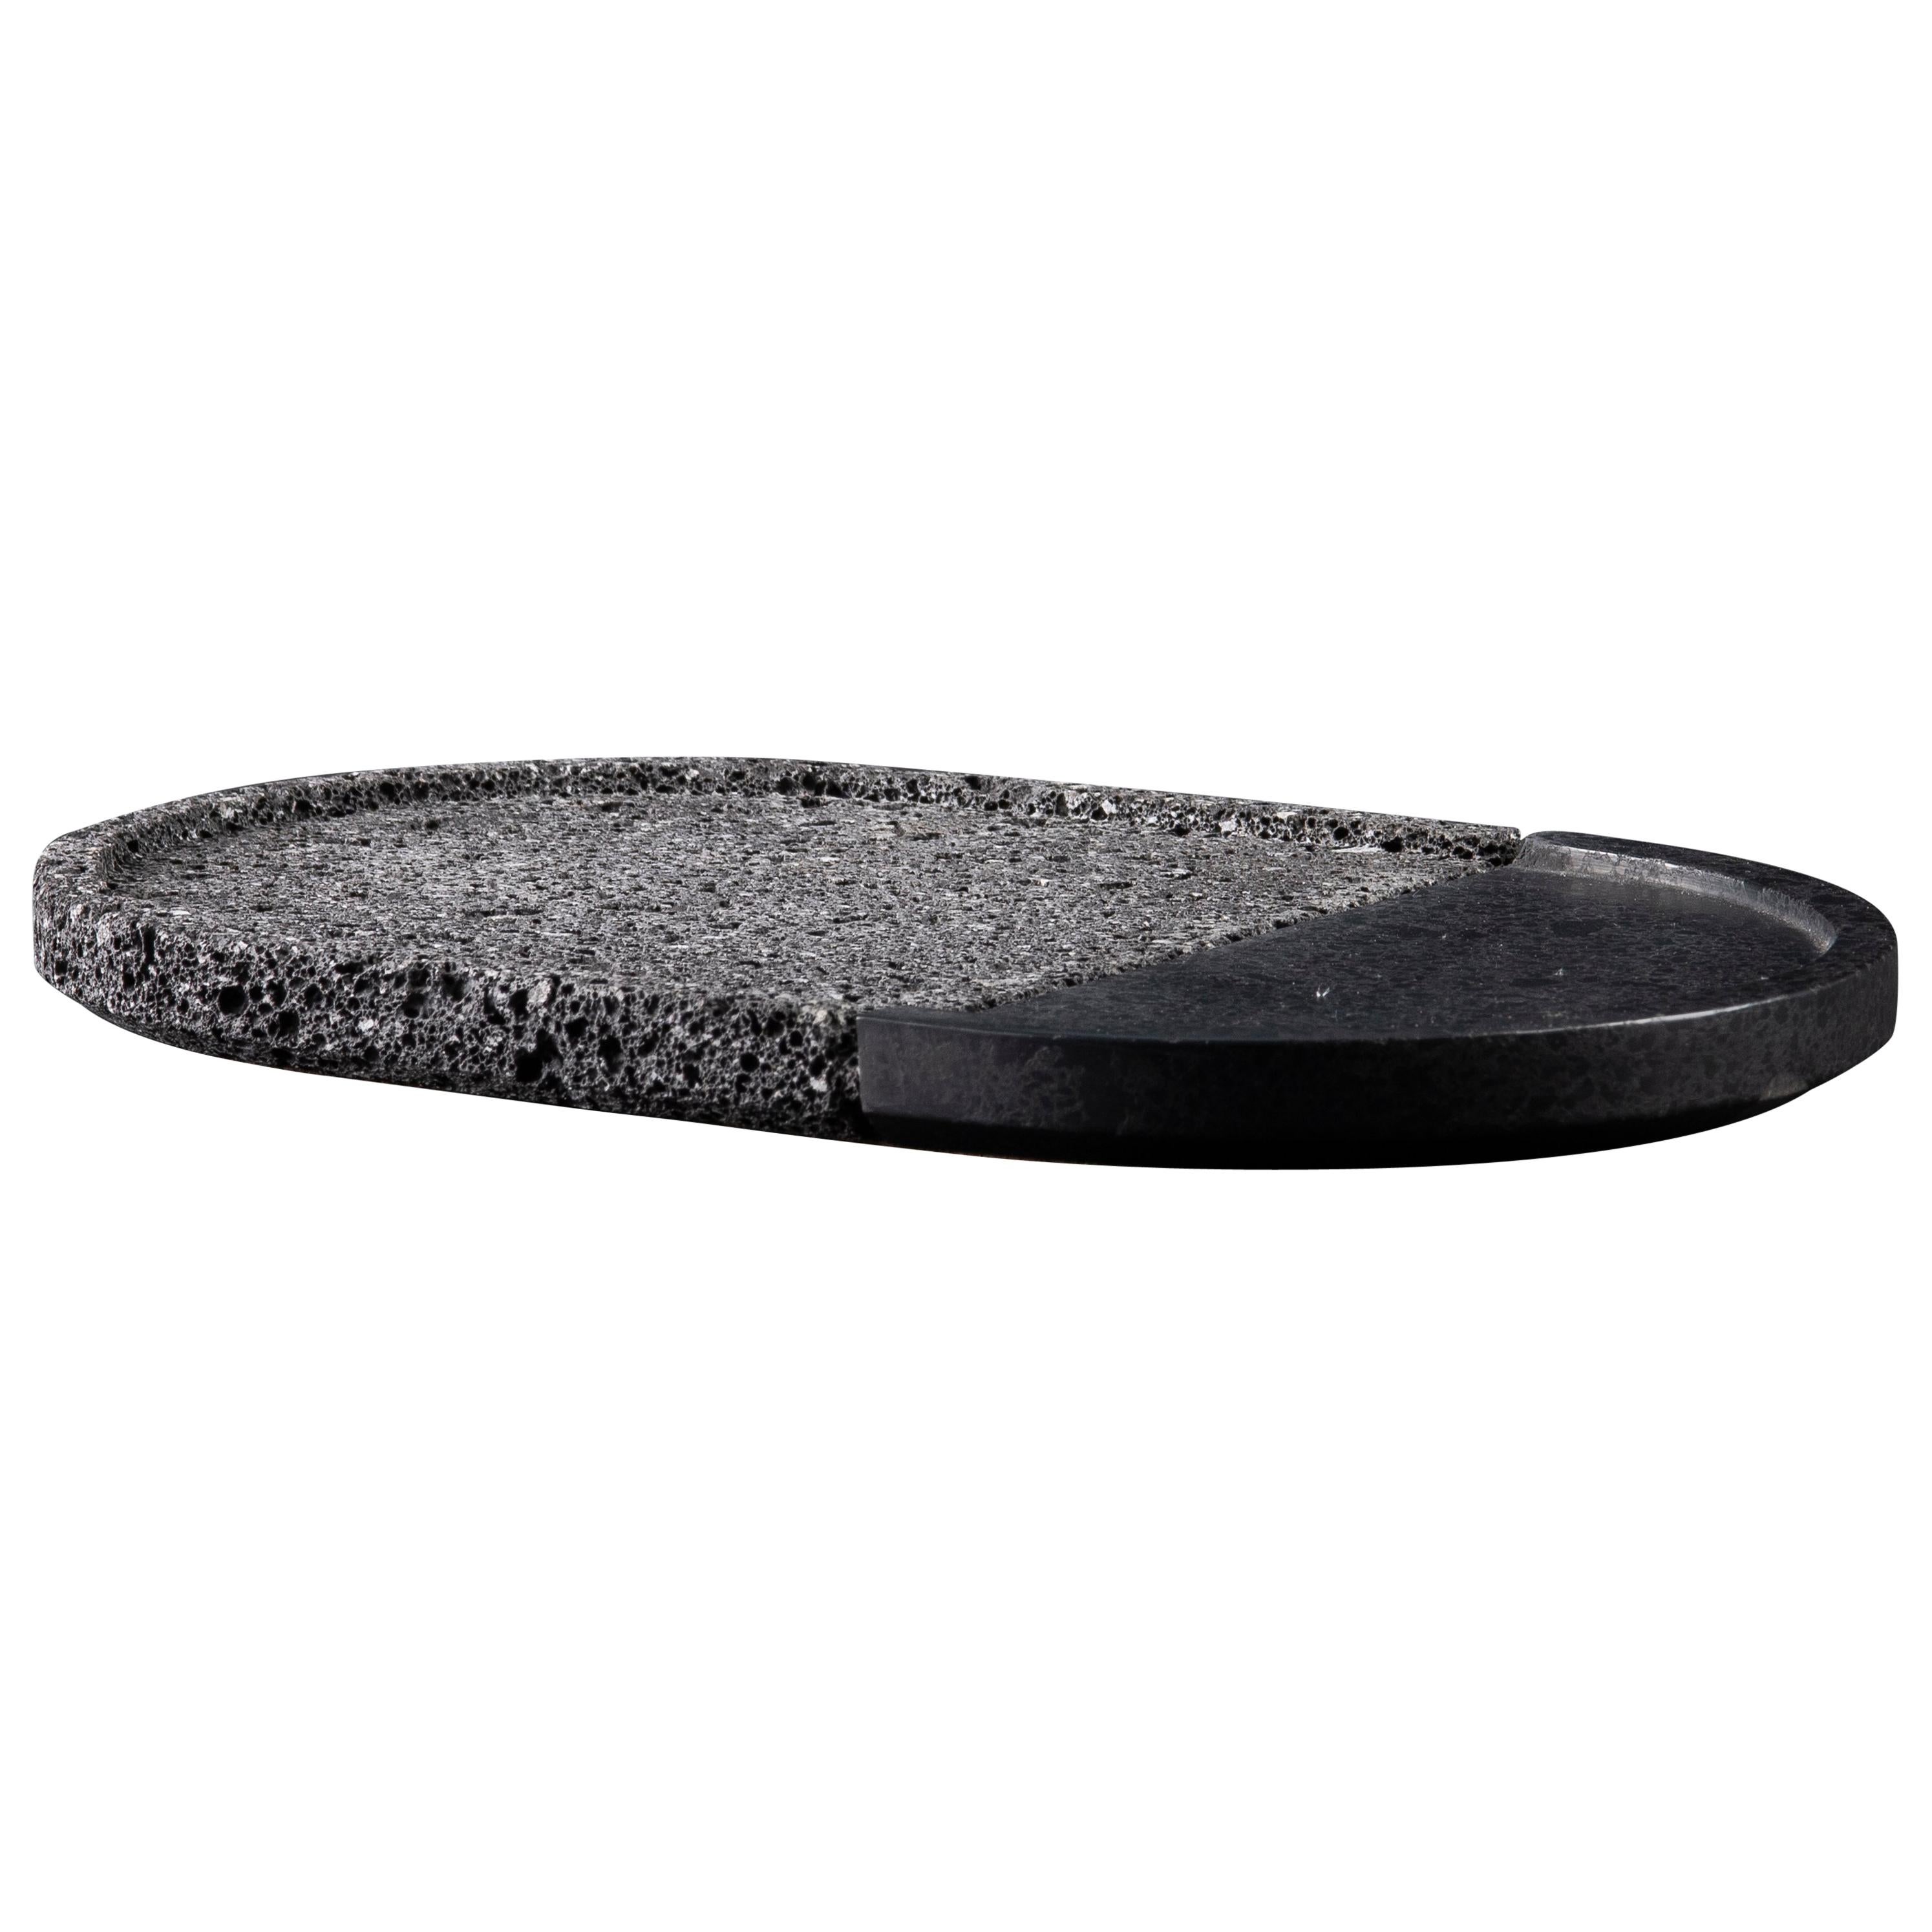 Lava-Tablett mit ovalem, Vulkanstein